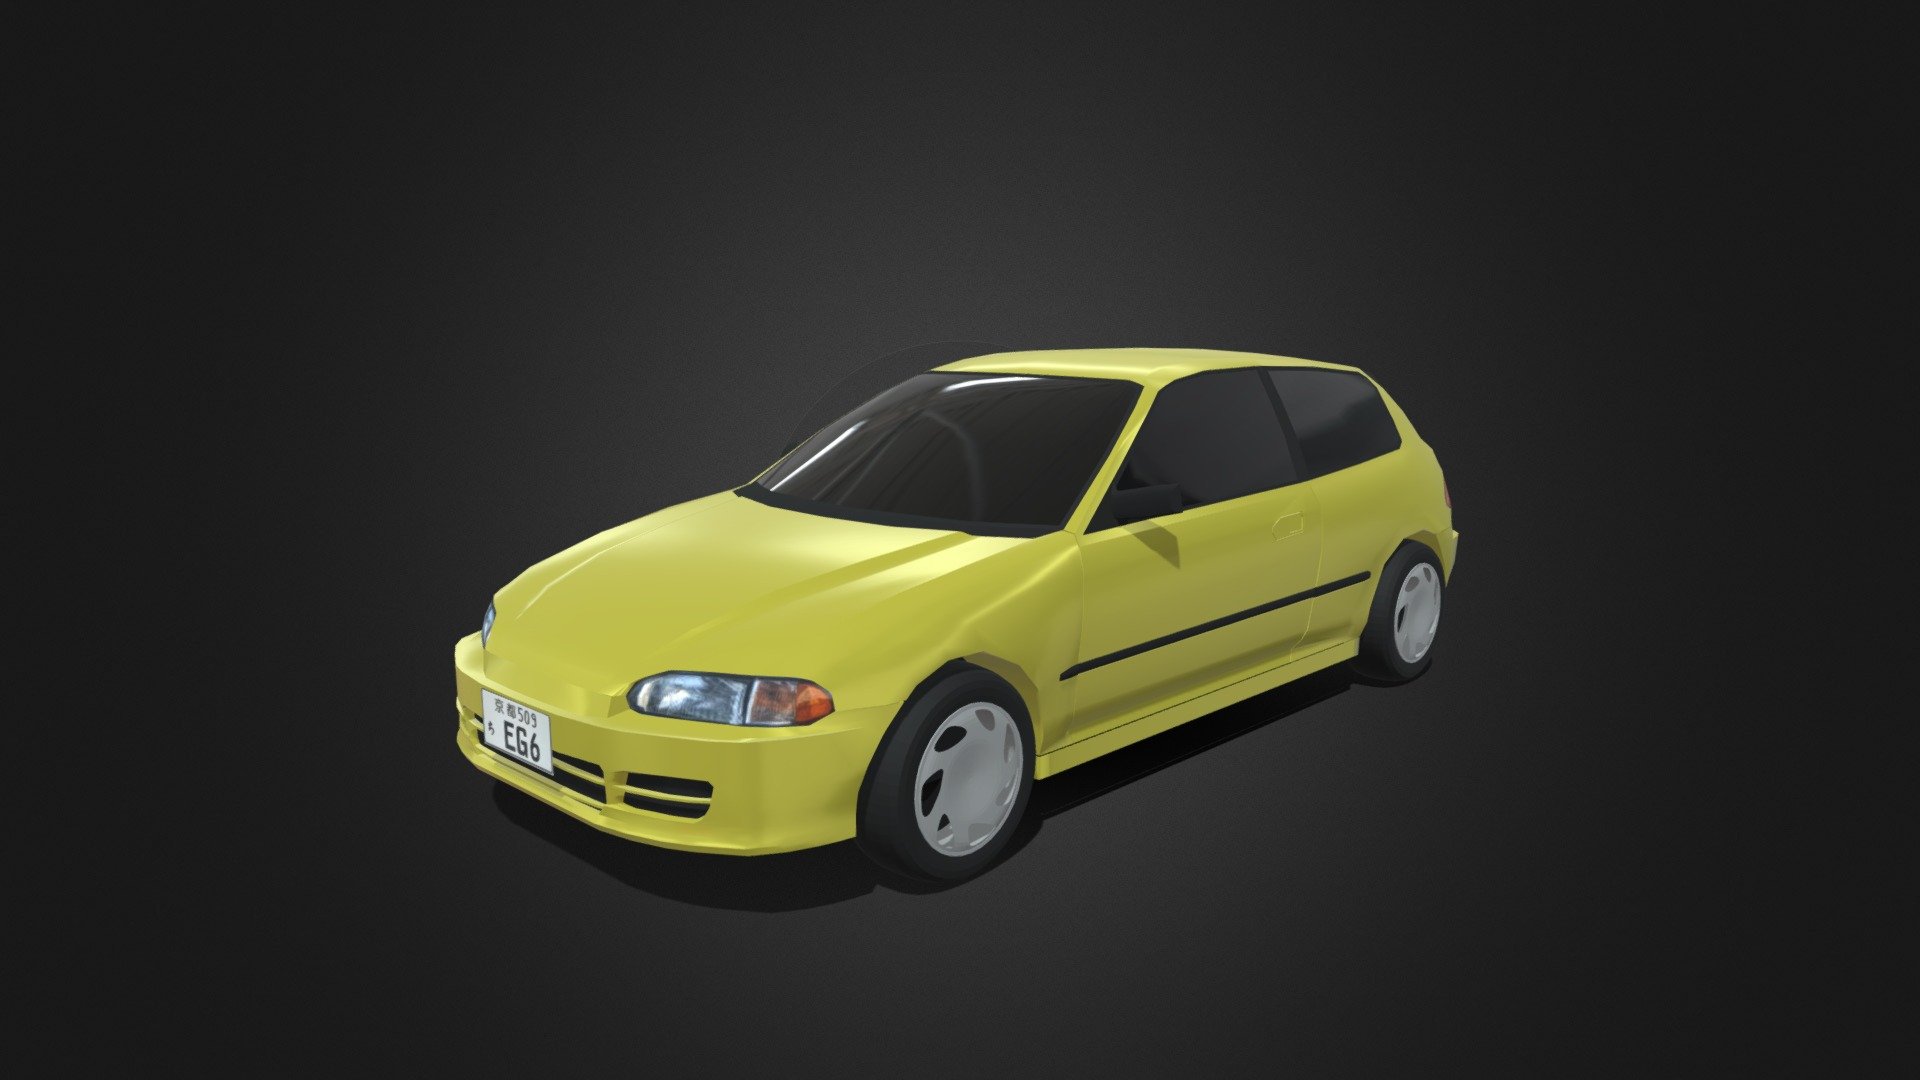 5th Gen Honda Civic
Hatchback
2 doors - 1991 Honda Civic EG6 - Download Free 3D model by rifdanzz 3d model